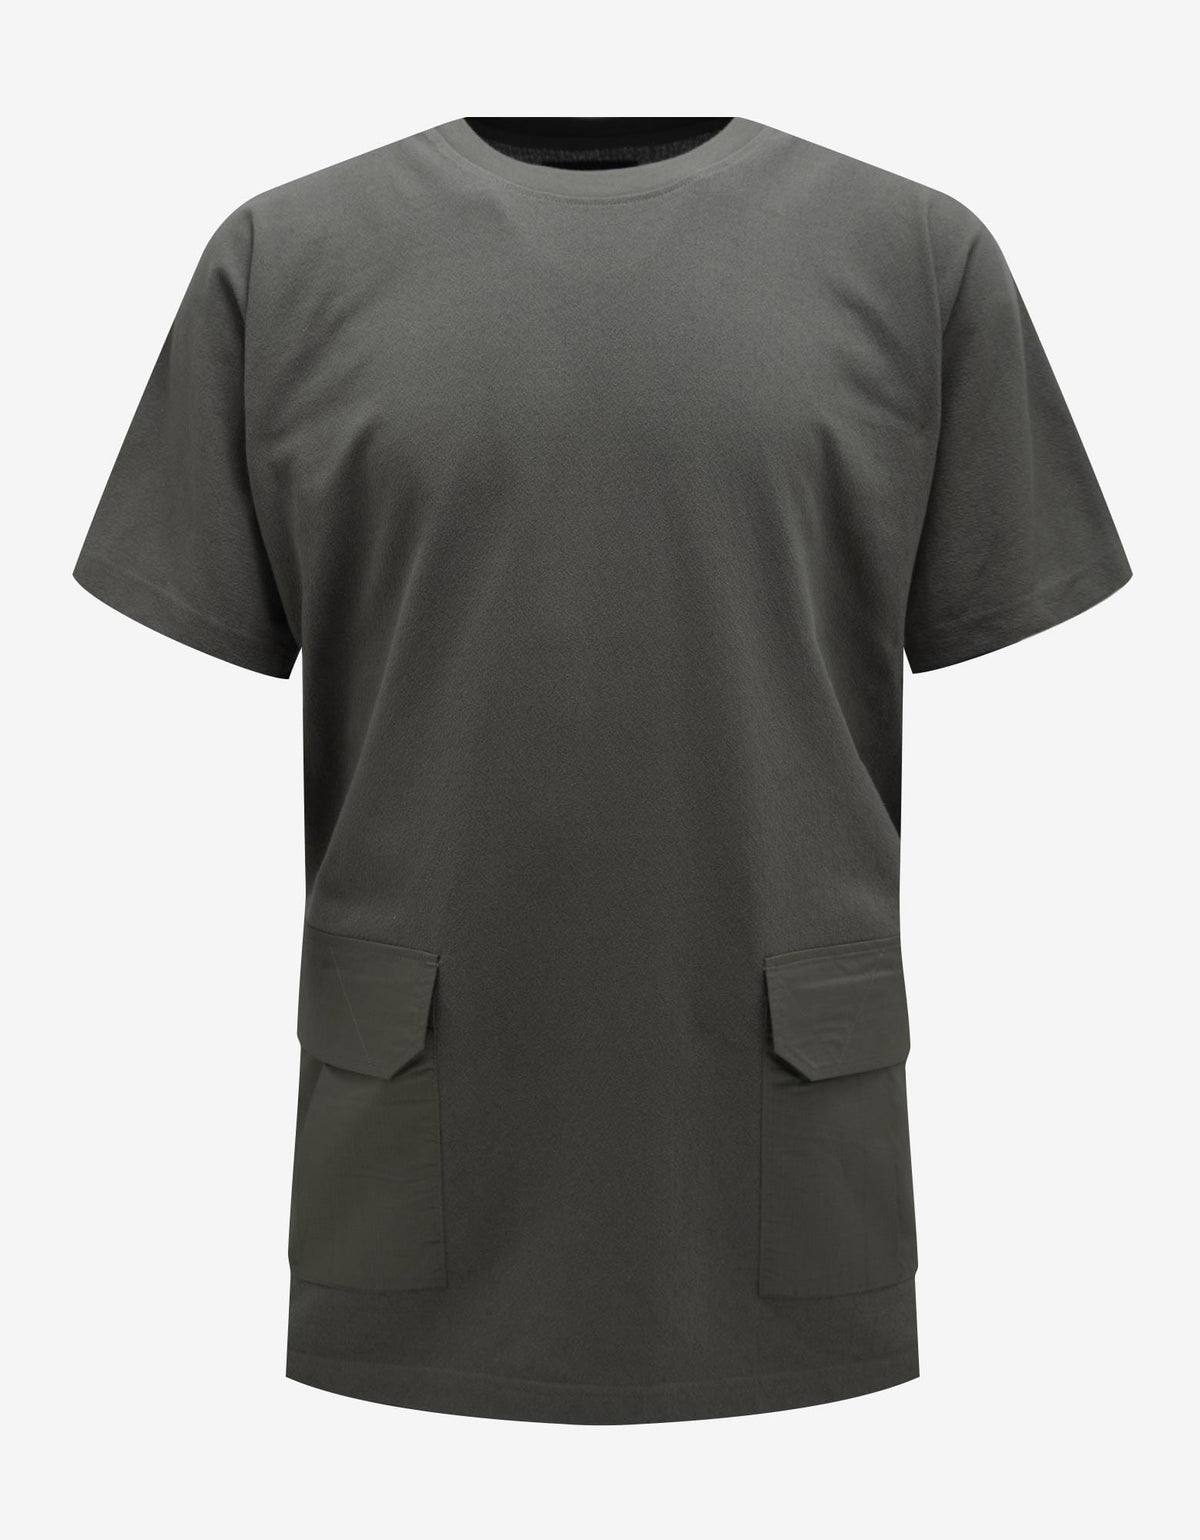 Y-3 Green Crepe Jersey Pocket T-Shirt